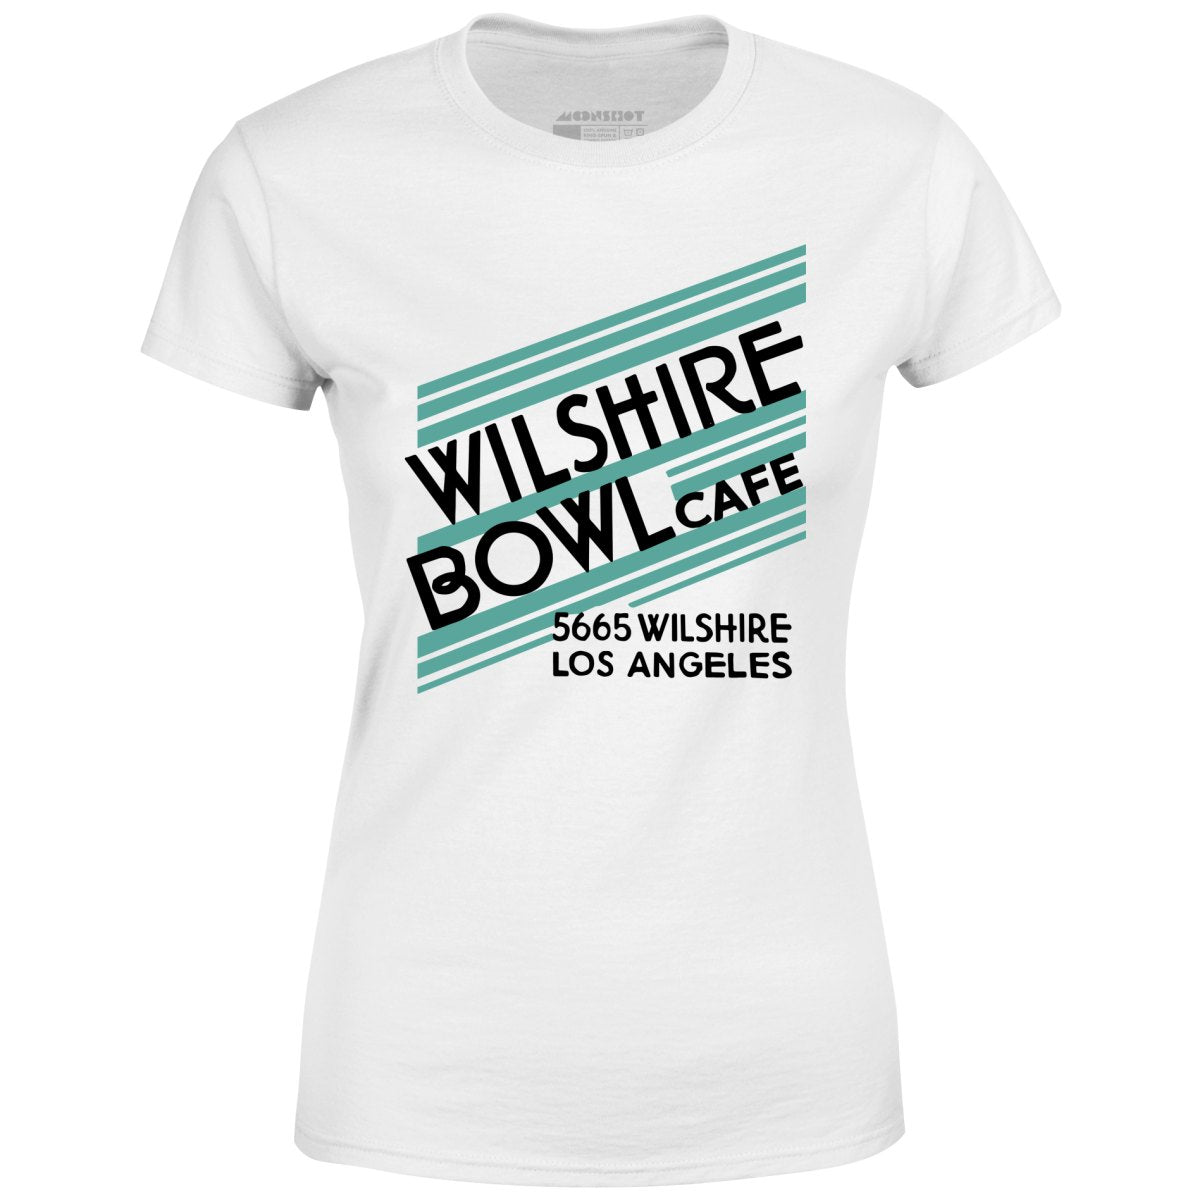 Wilshire Bowl Cafe - Los Angeles, CA - Vintage Restaurant - Women's T-Shirt